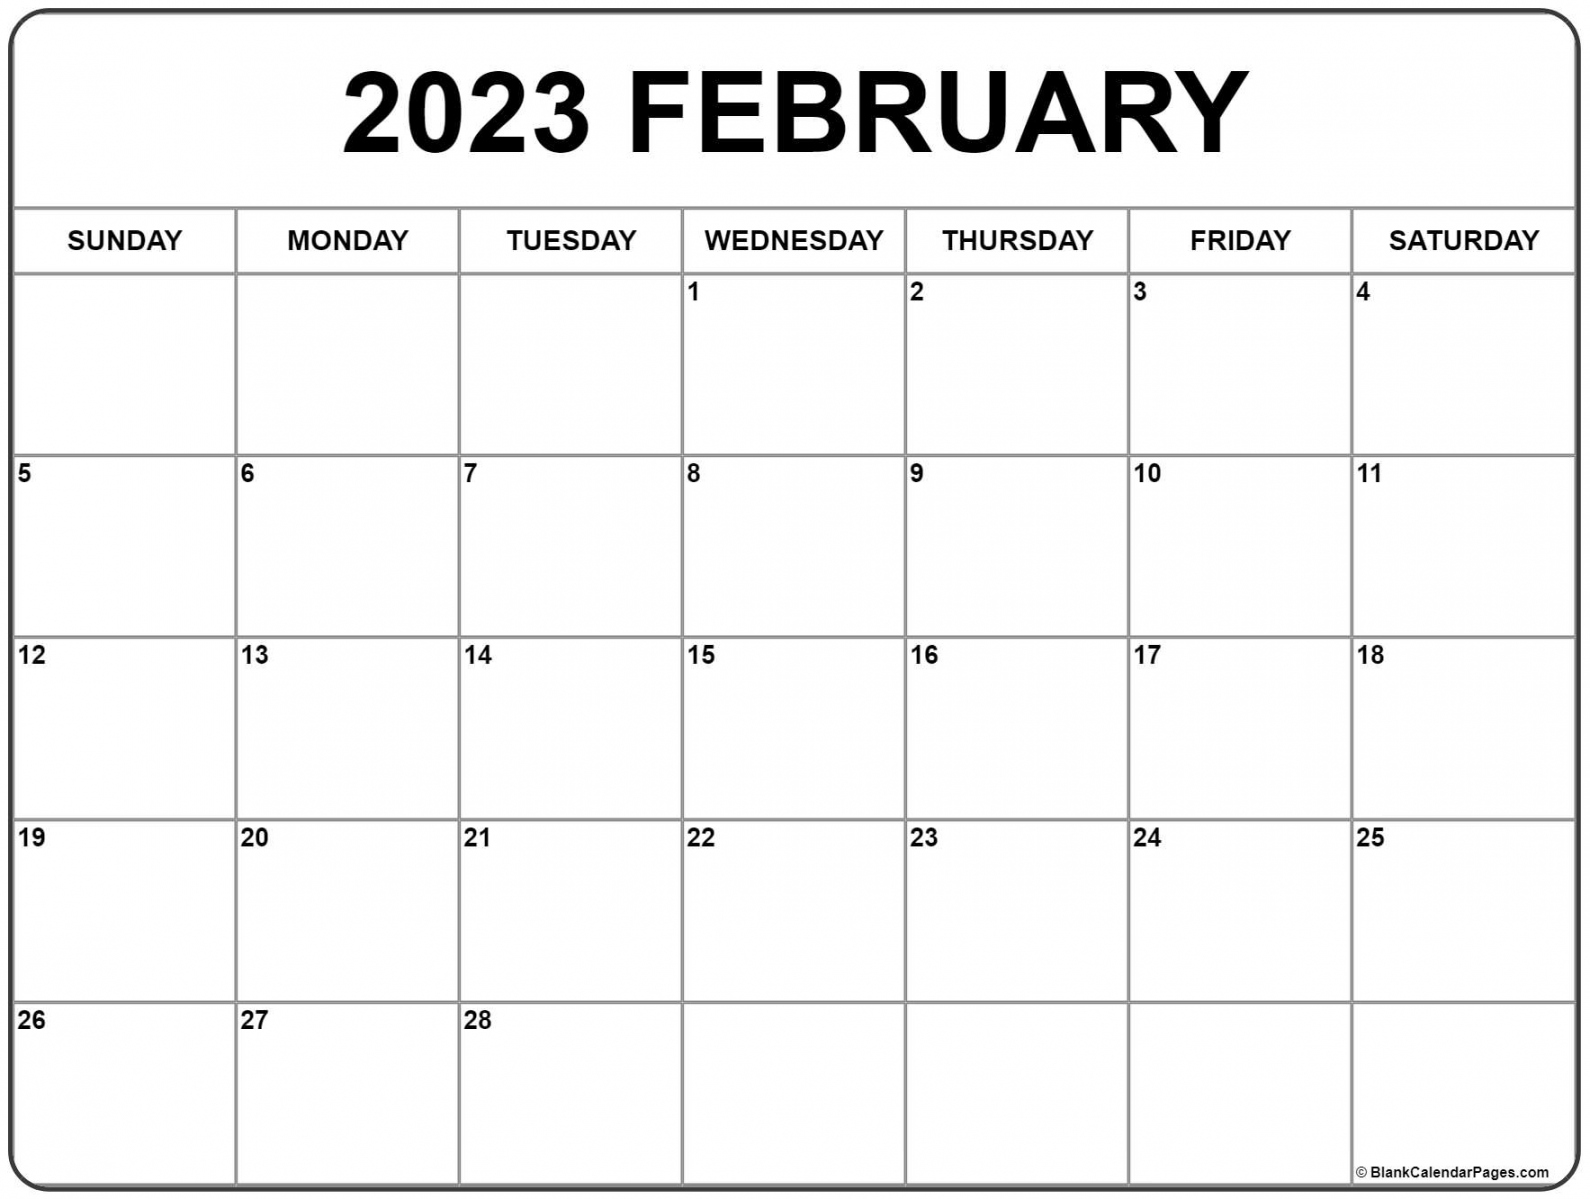 February 2023 Calendar Free Printable - Printable - February  calendar  free printable calendar